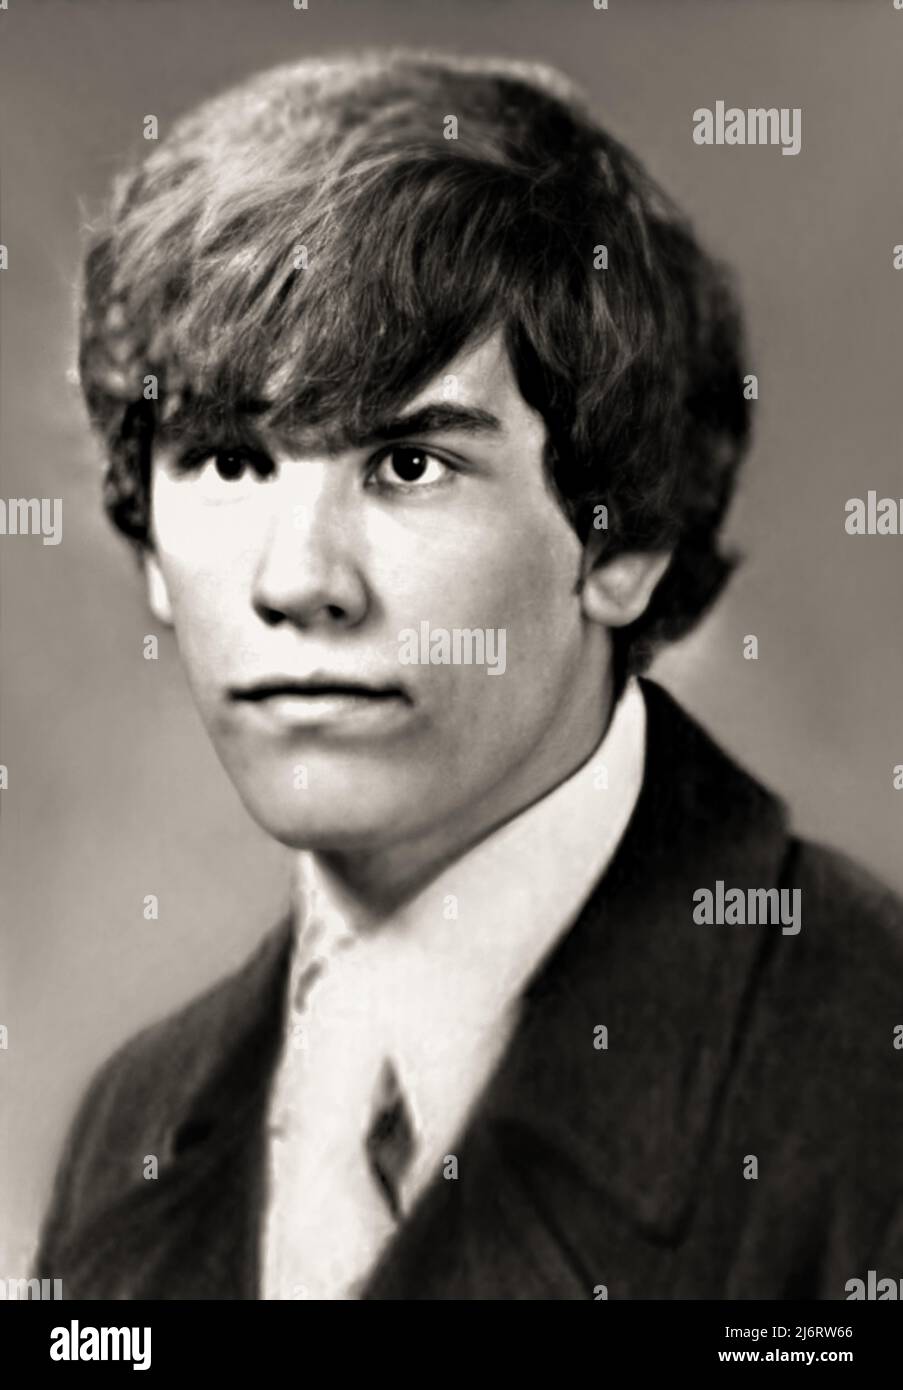 1970 , USA : The american great movie actor and director JOHN MALKOVICH ( born 9 december 1953 ), aged 17, photo in the High School Yearbook . Unknown photographer .-  HISTORY - FOTO STORICHE - ATTORE - MOVIE - CINEMA  - personalitÃ   da giovane - personality personalities when was young - PORTRAIT - RITRATTO - TEENAGER - ADOLESCENZA - ADOLESCENTE - CHILDREN - CHILDHOOD - TEATRO - THEATRE --- ARCHIVIO GBB Stock Photo